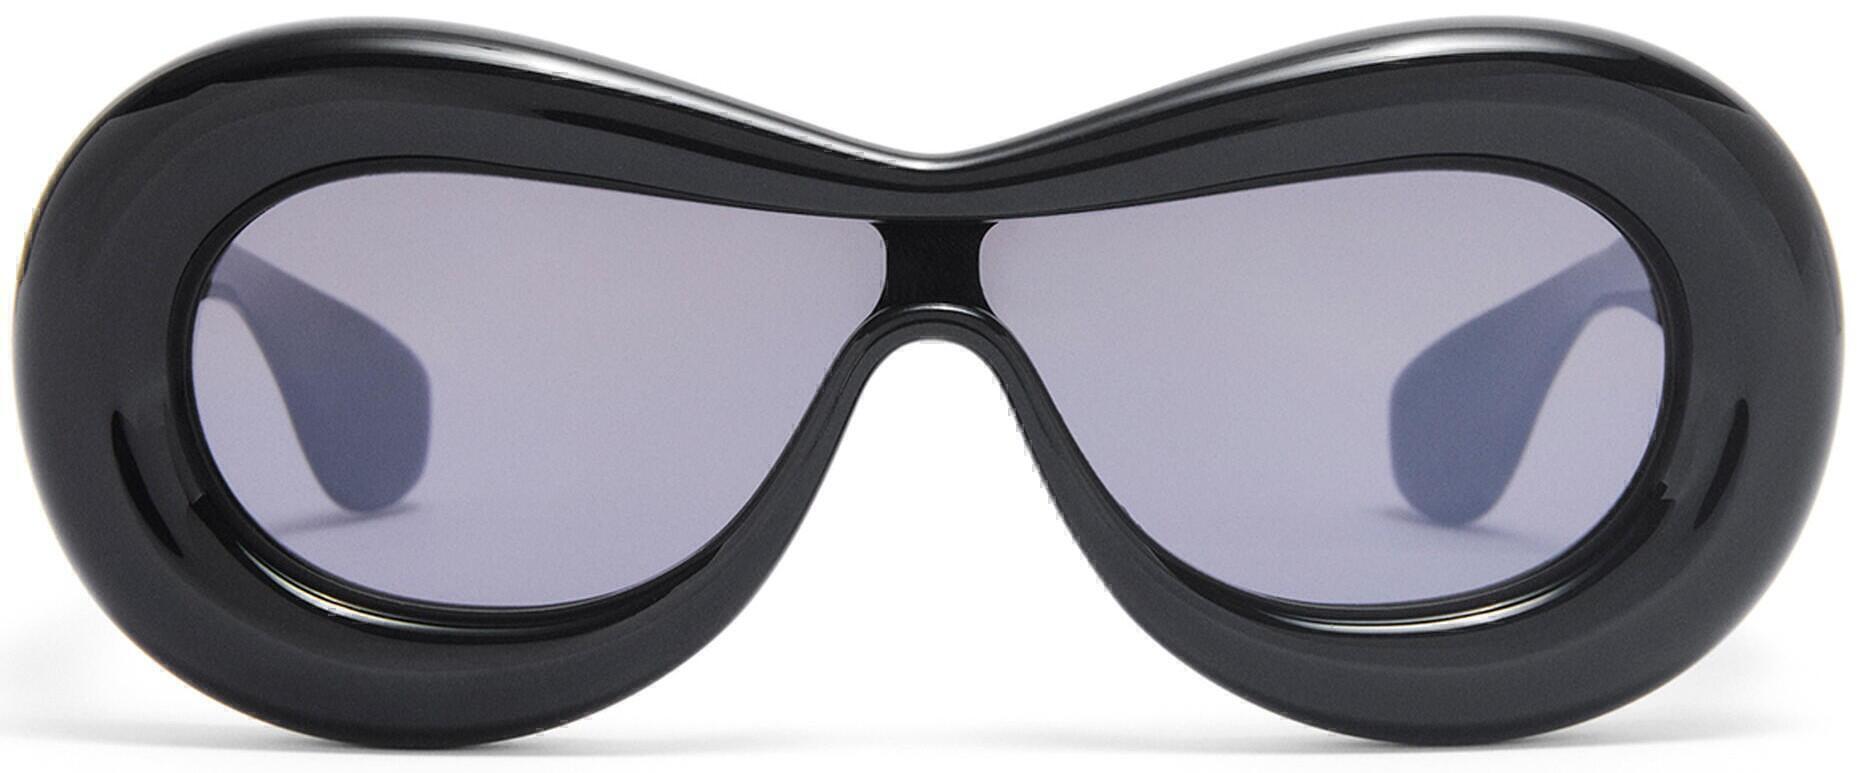 Sunglasses (Black) | style